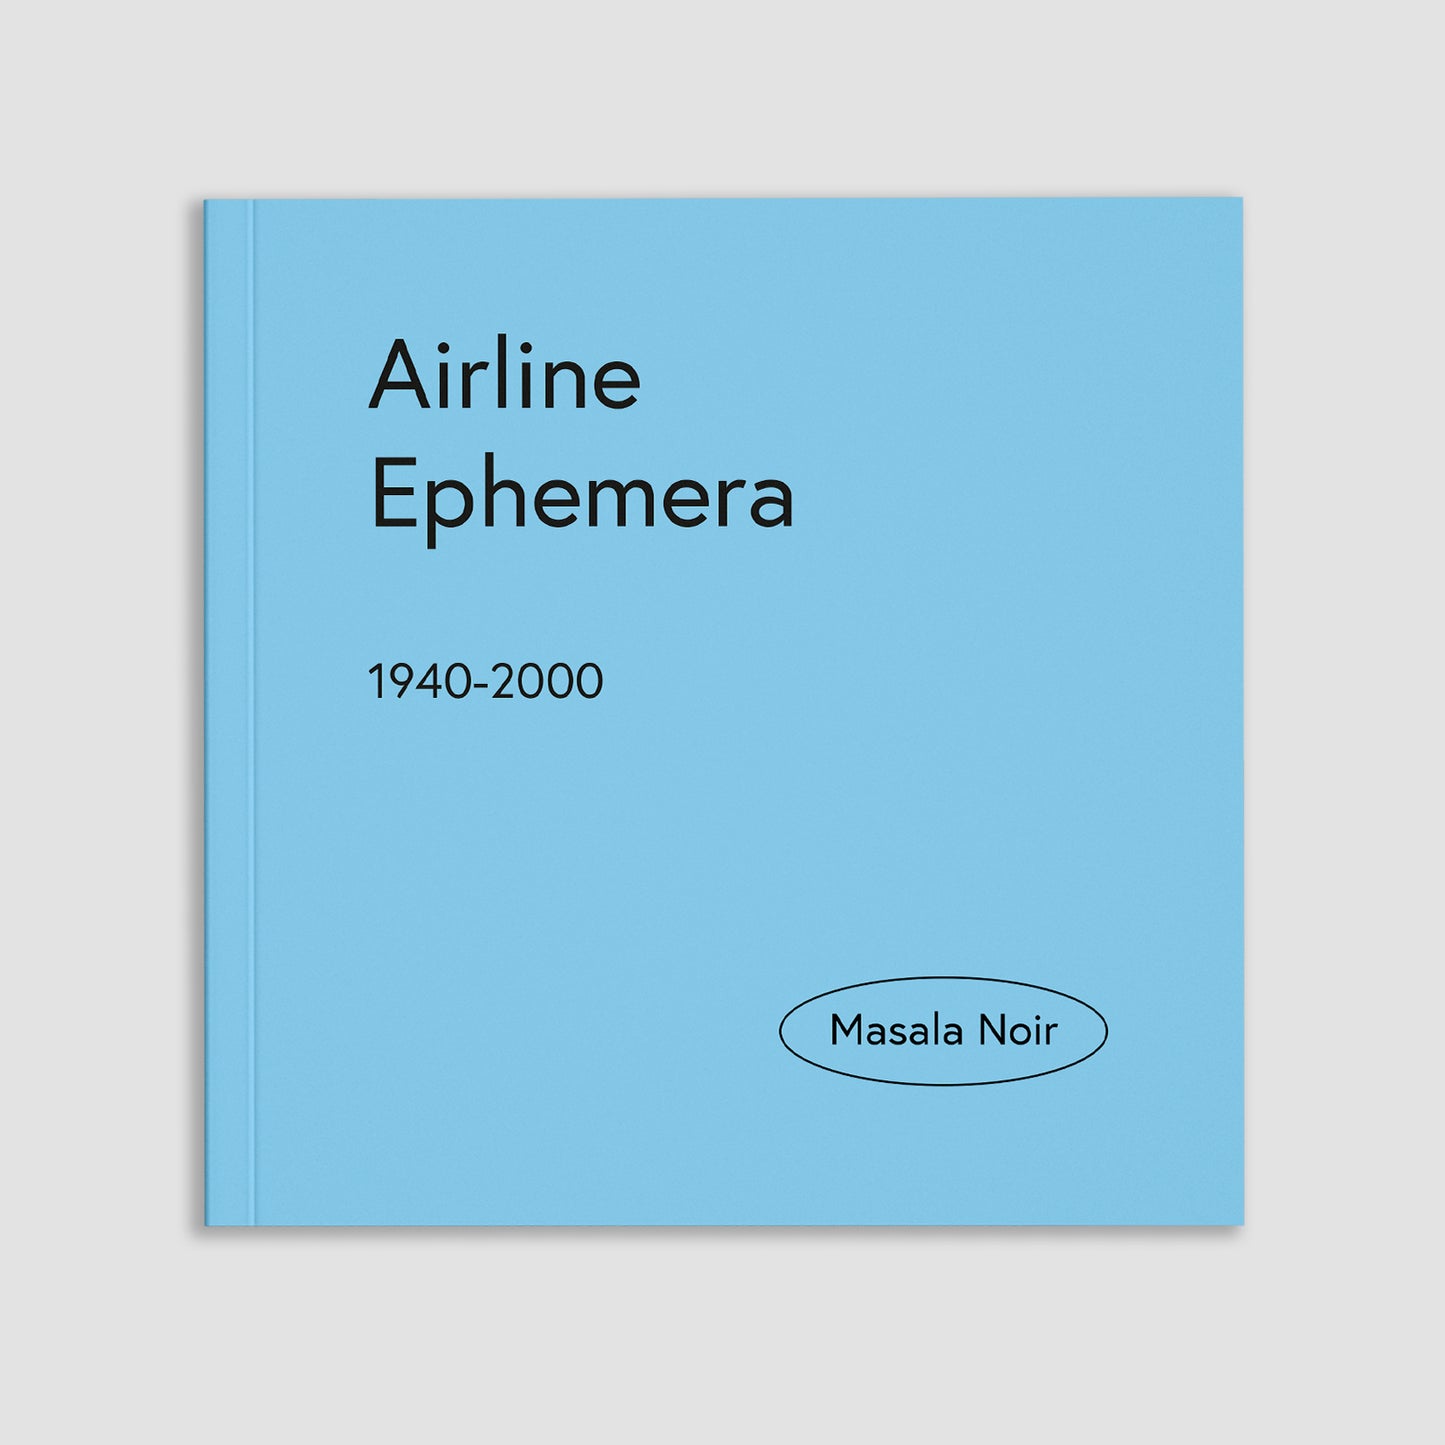 Airlines Ephemera